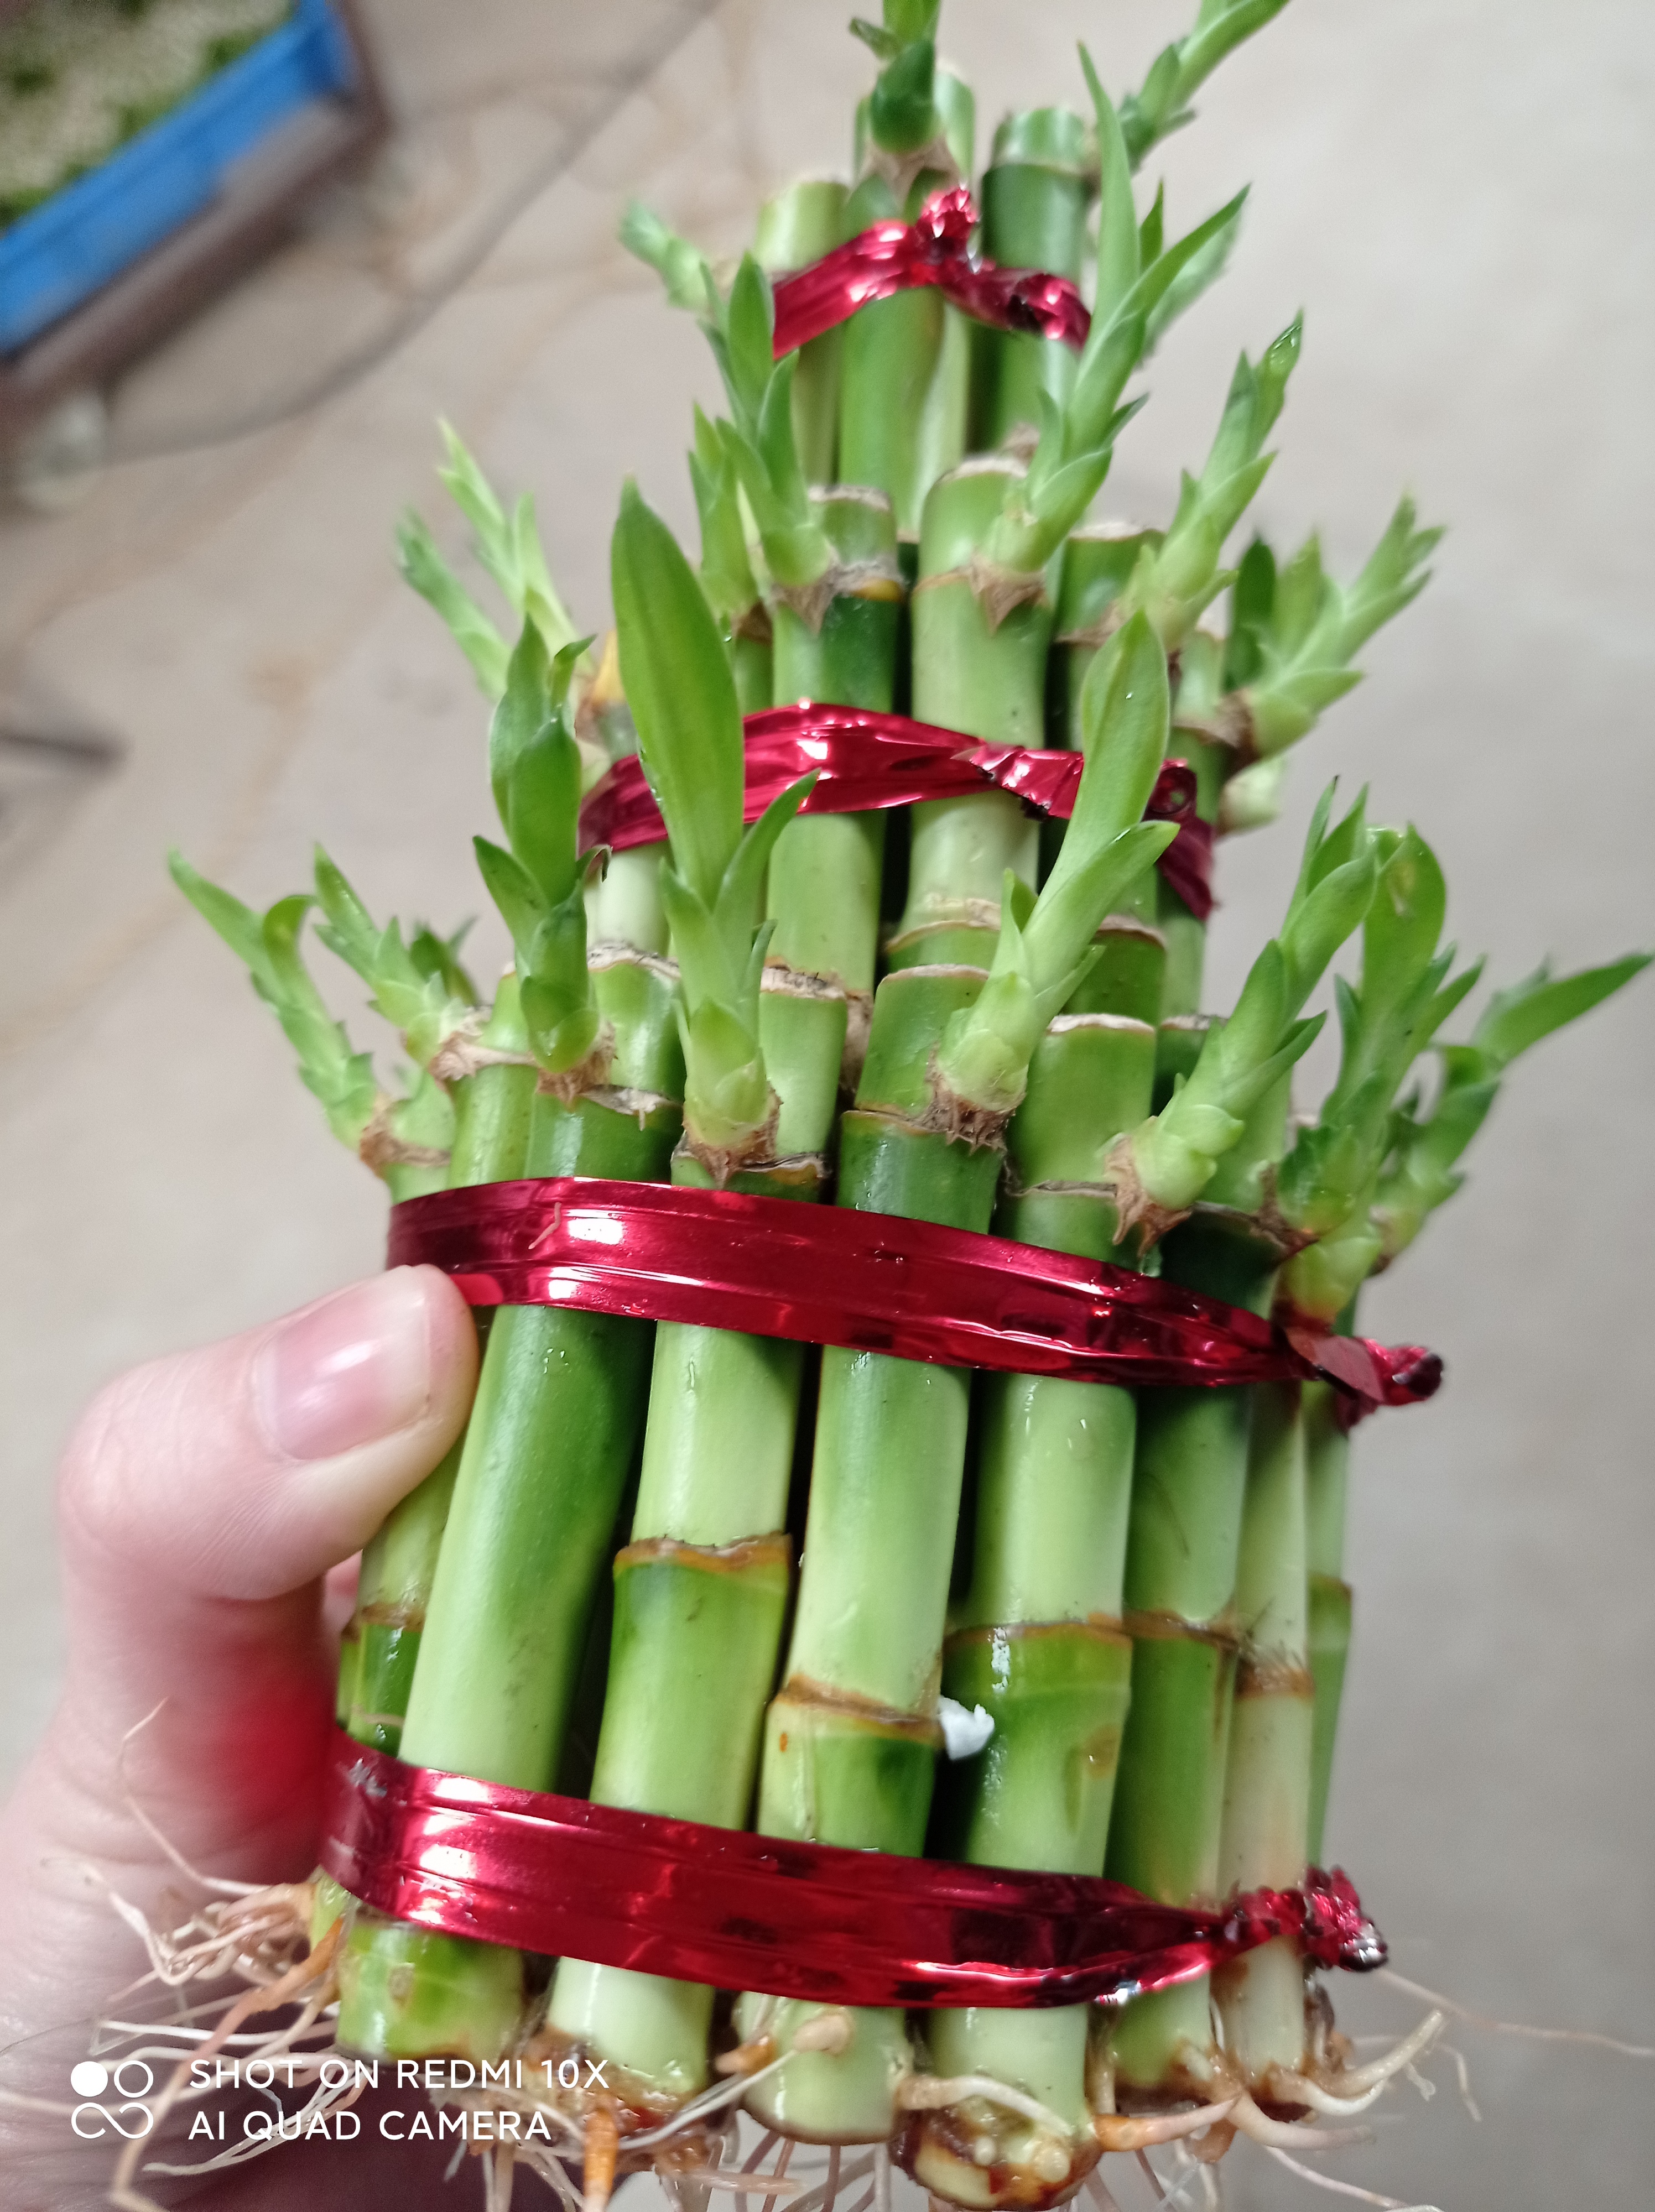 Dracaena sanderiana lucky bamboo indoor plants wholes sales manufactuerer   